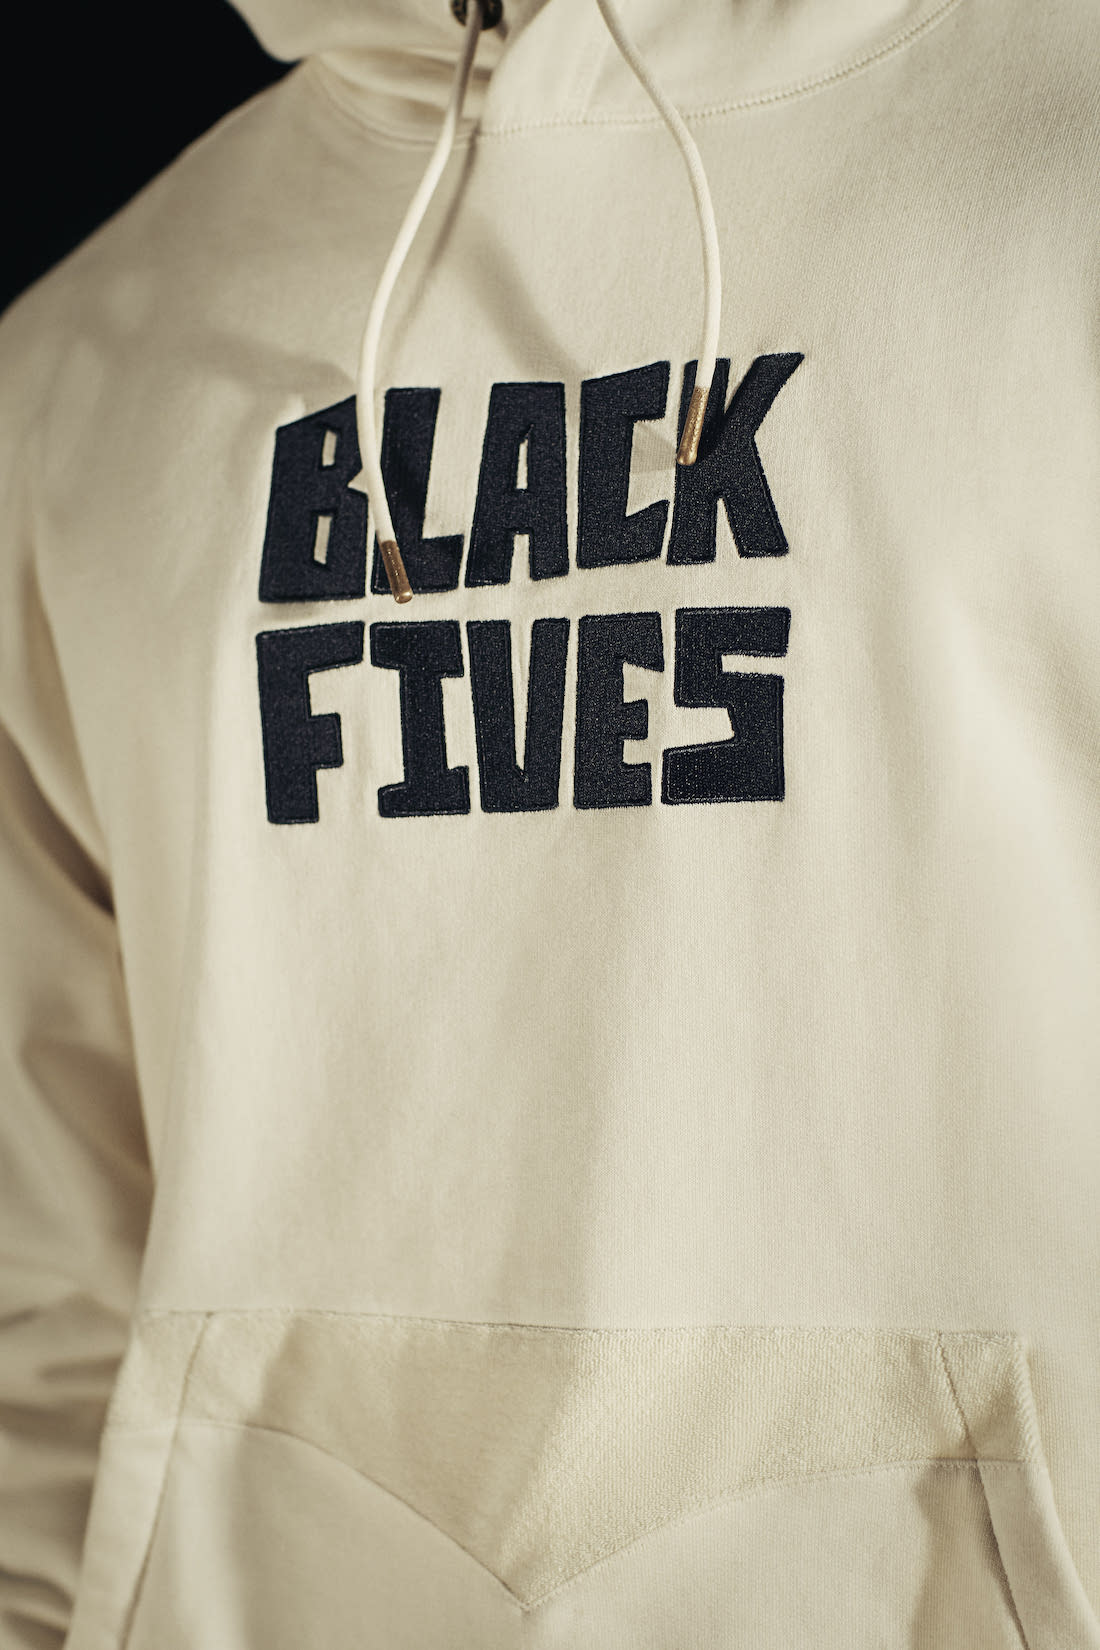 Puma Black Fives Foundation Release Date Info